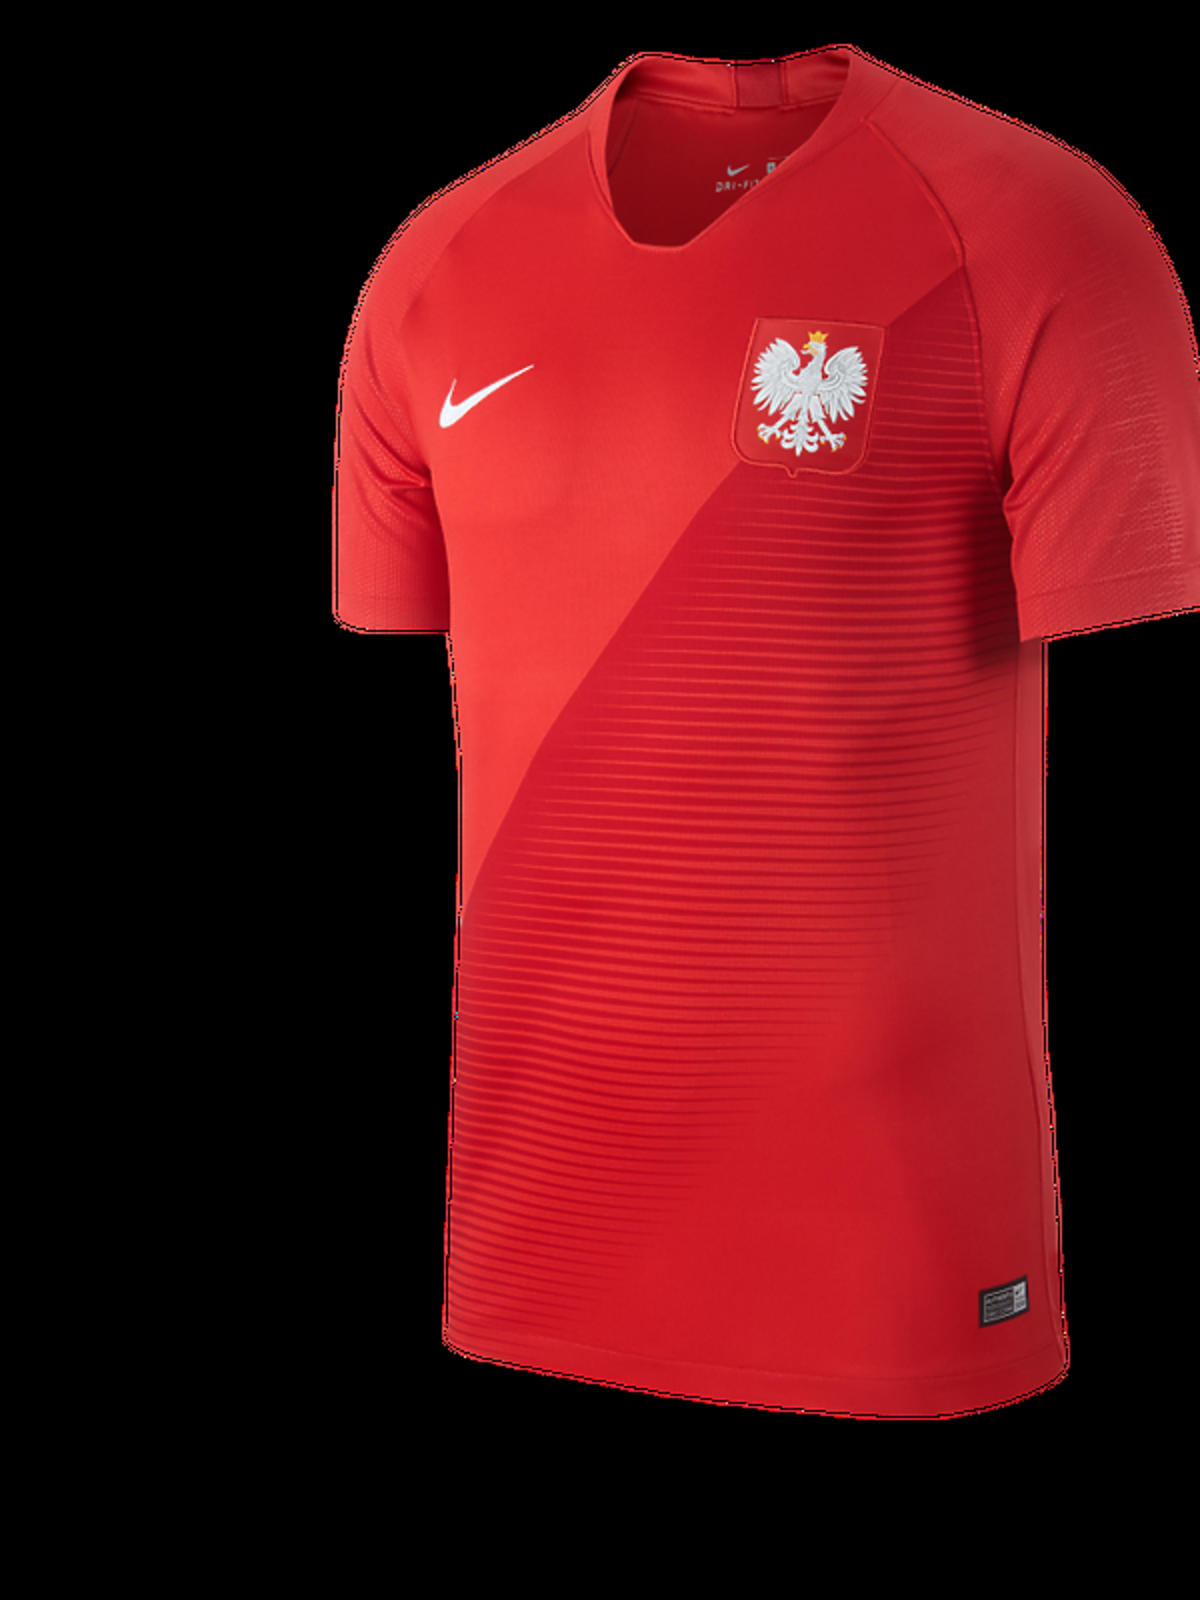 T-shirt Nike Poland Stadium Away, 349 zł